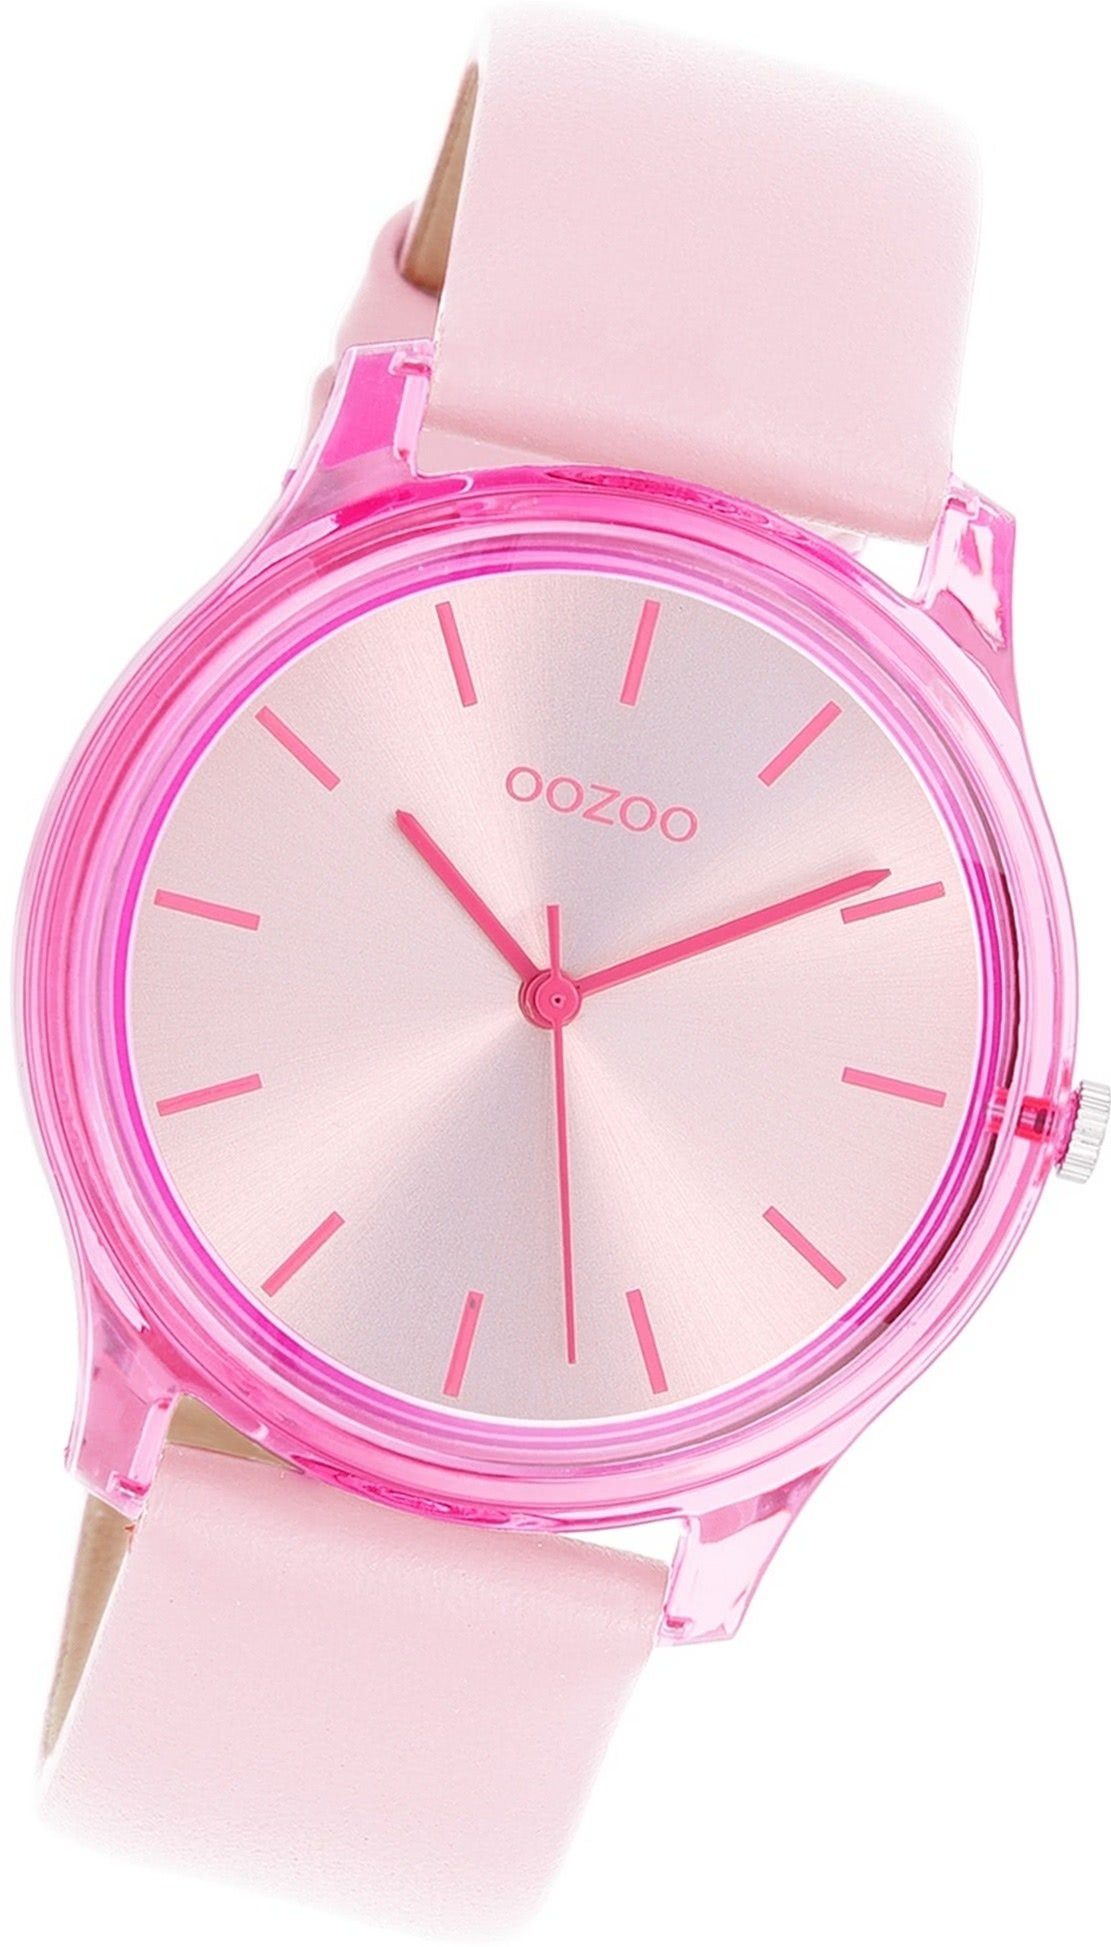 OOZOO Quarzuhr Oozoo Damen pink, Armbanduhr (ca. 36mm) Damenuhr Lederarmband mittel rundes Gehäuse, Timepieces